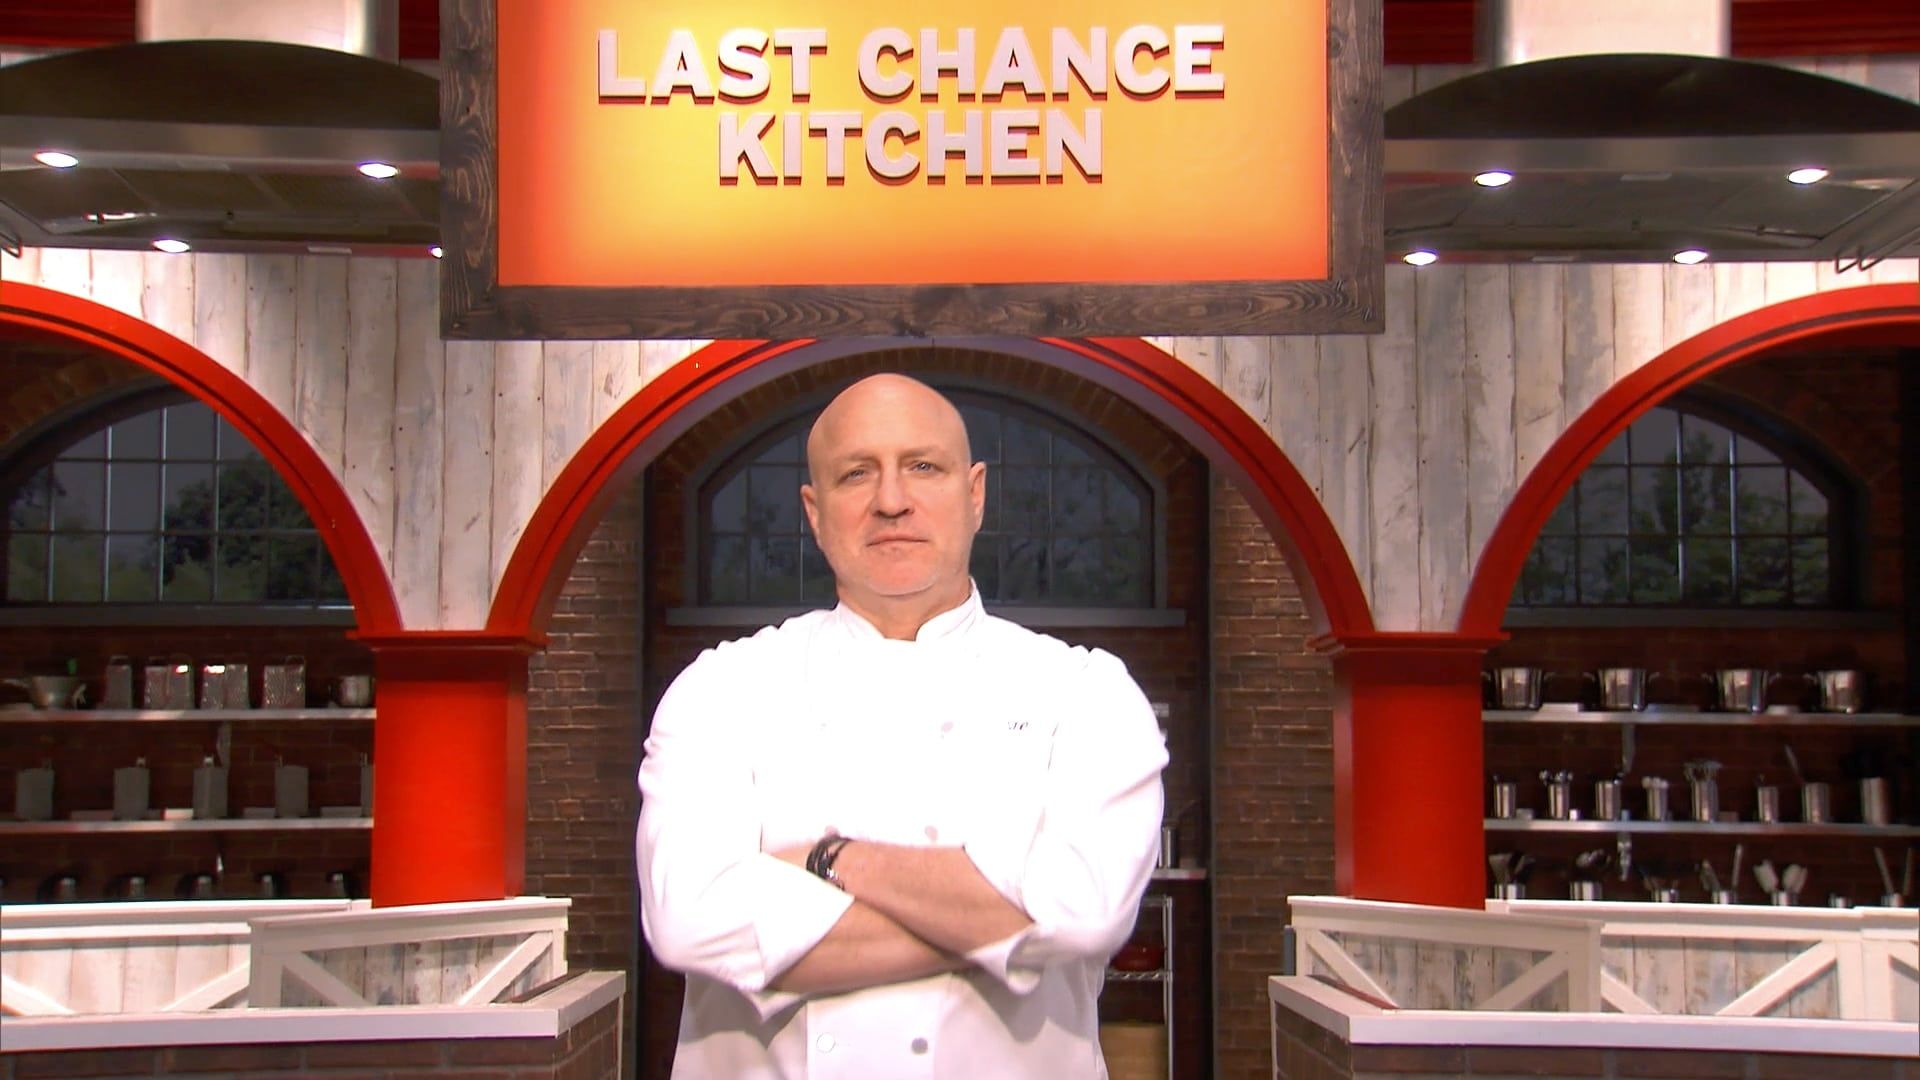 Bravo Tv Top Chef Last Chance Kitchen Season 10 Dandk Organizer